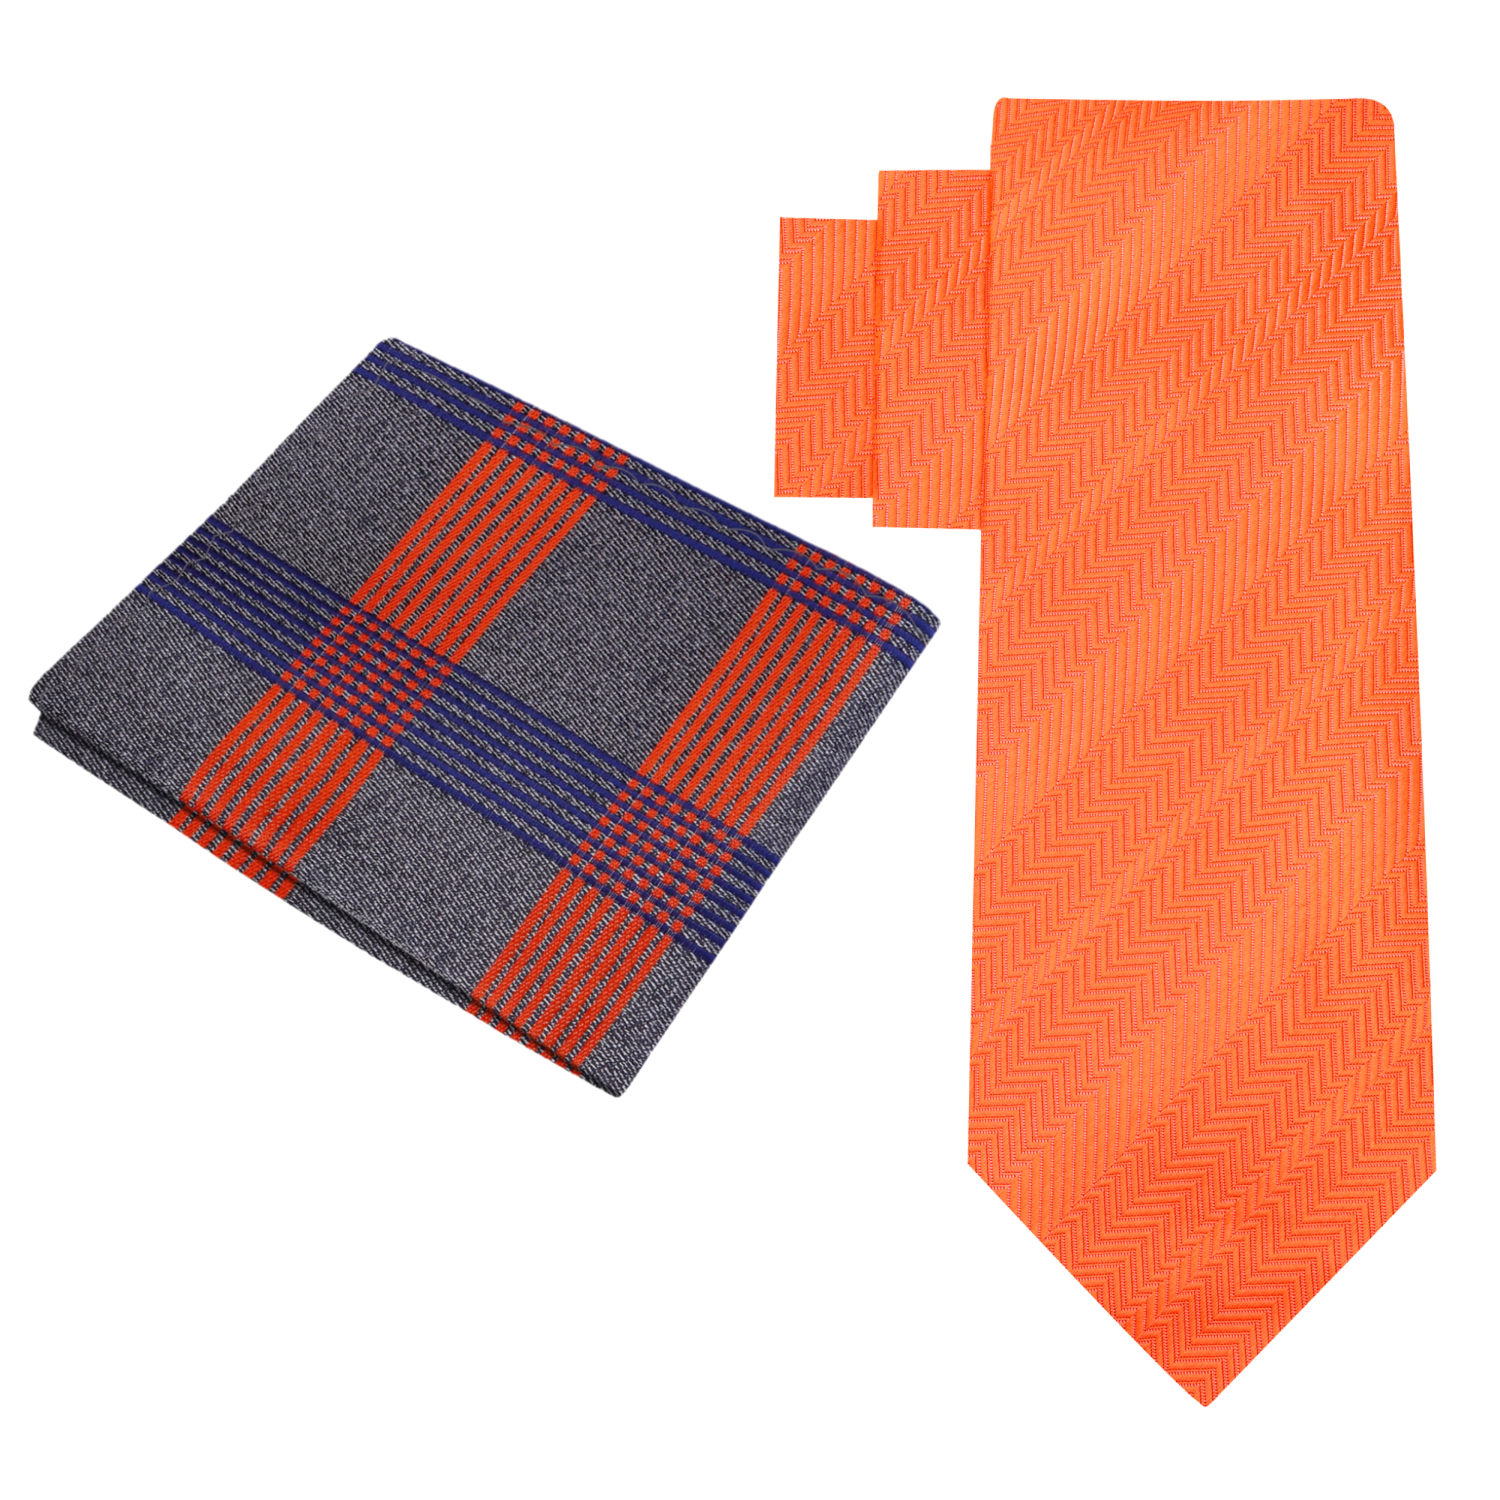 View 2 Solid Orange Necktie and Accenting Grey, Blue, Orange Plaid Square